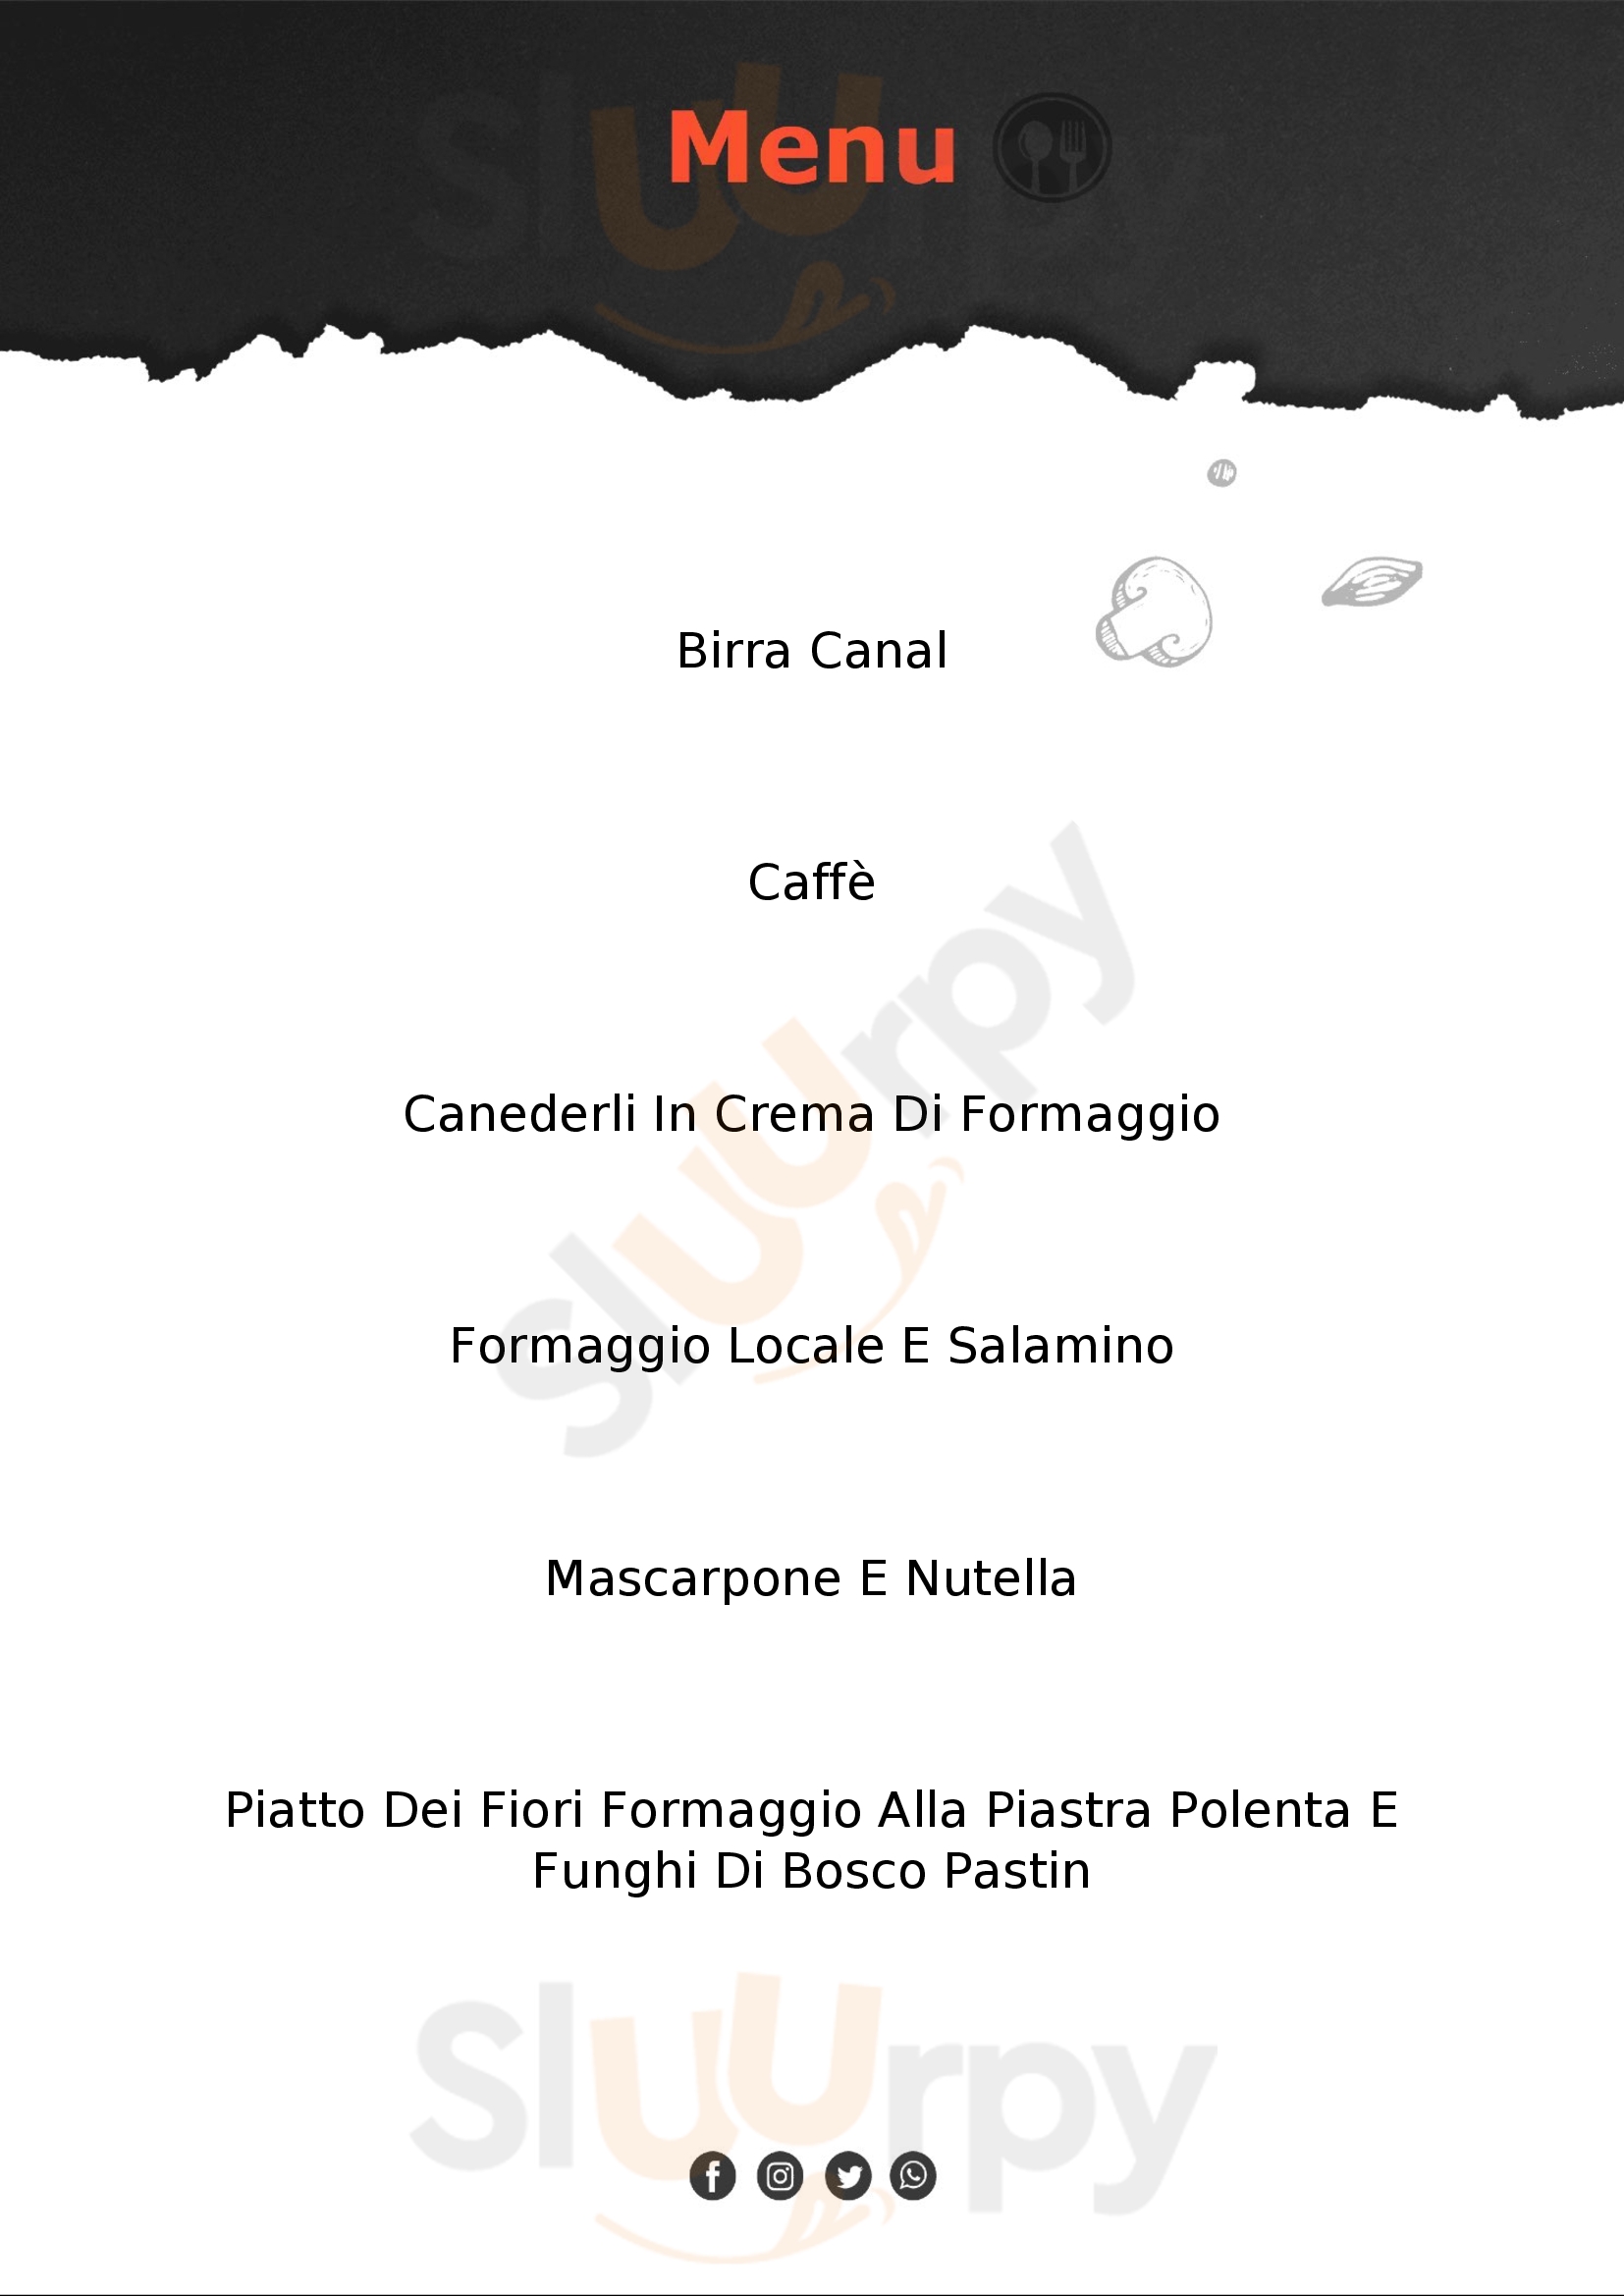 Birreria Pizzeria Costa Canale d'Agordo menù 1 pagina